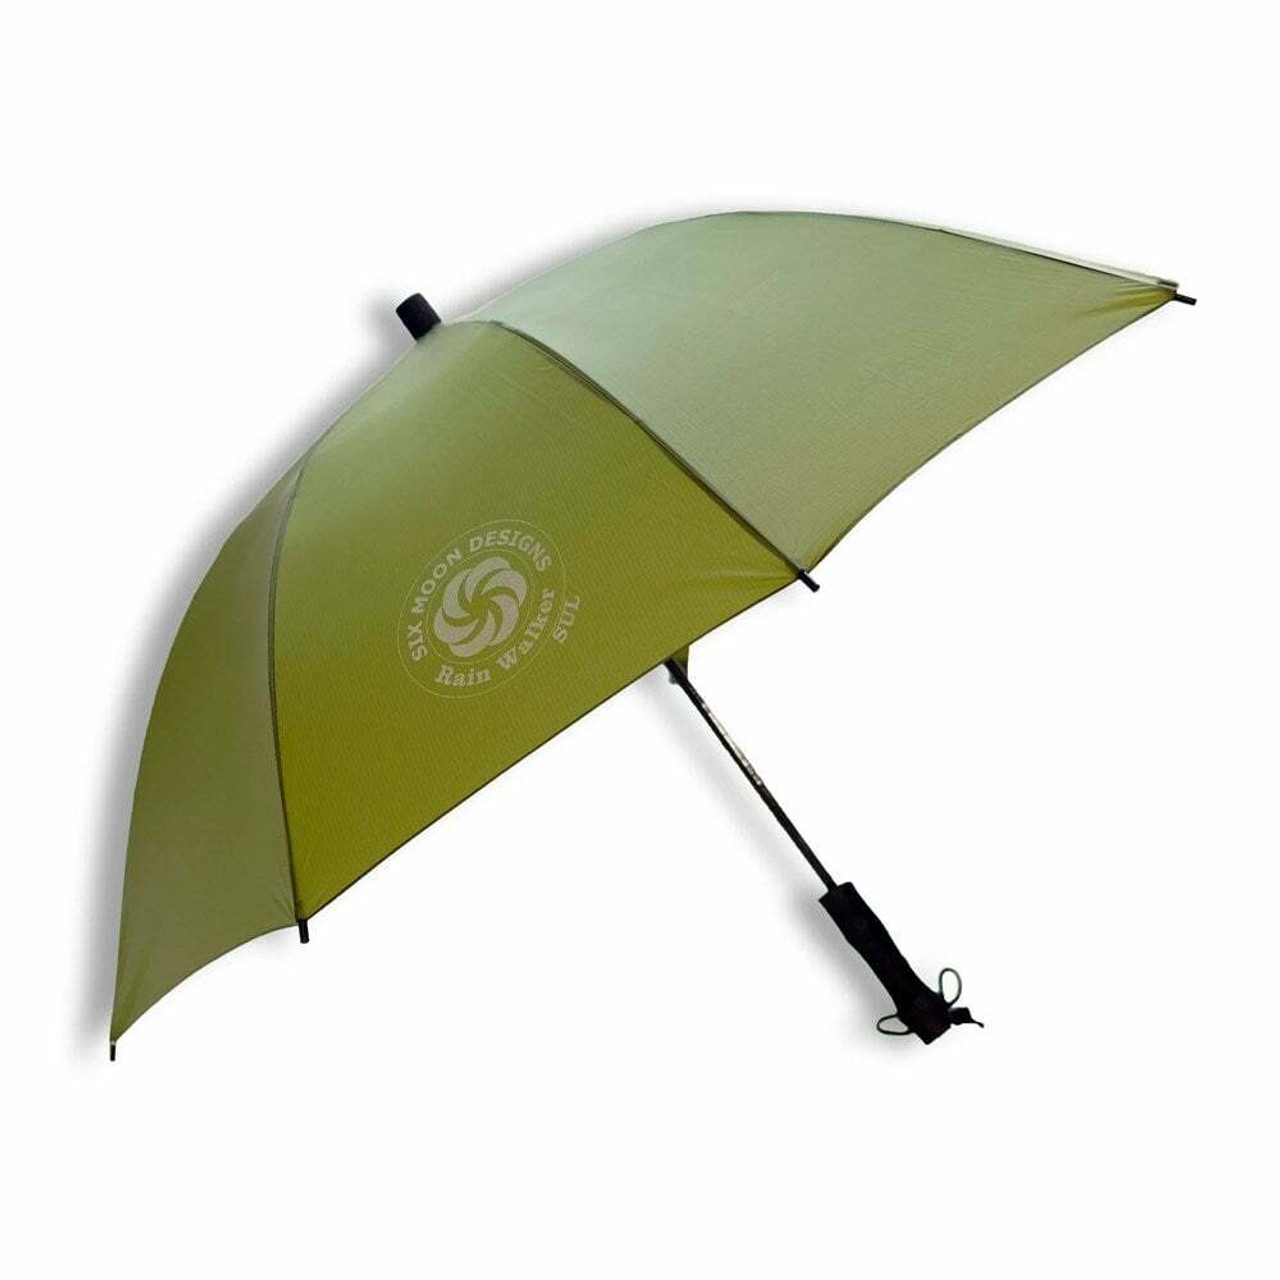 Six Moon Designs Rain Walker SUL Umbrella | UK | Ultralight 